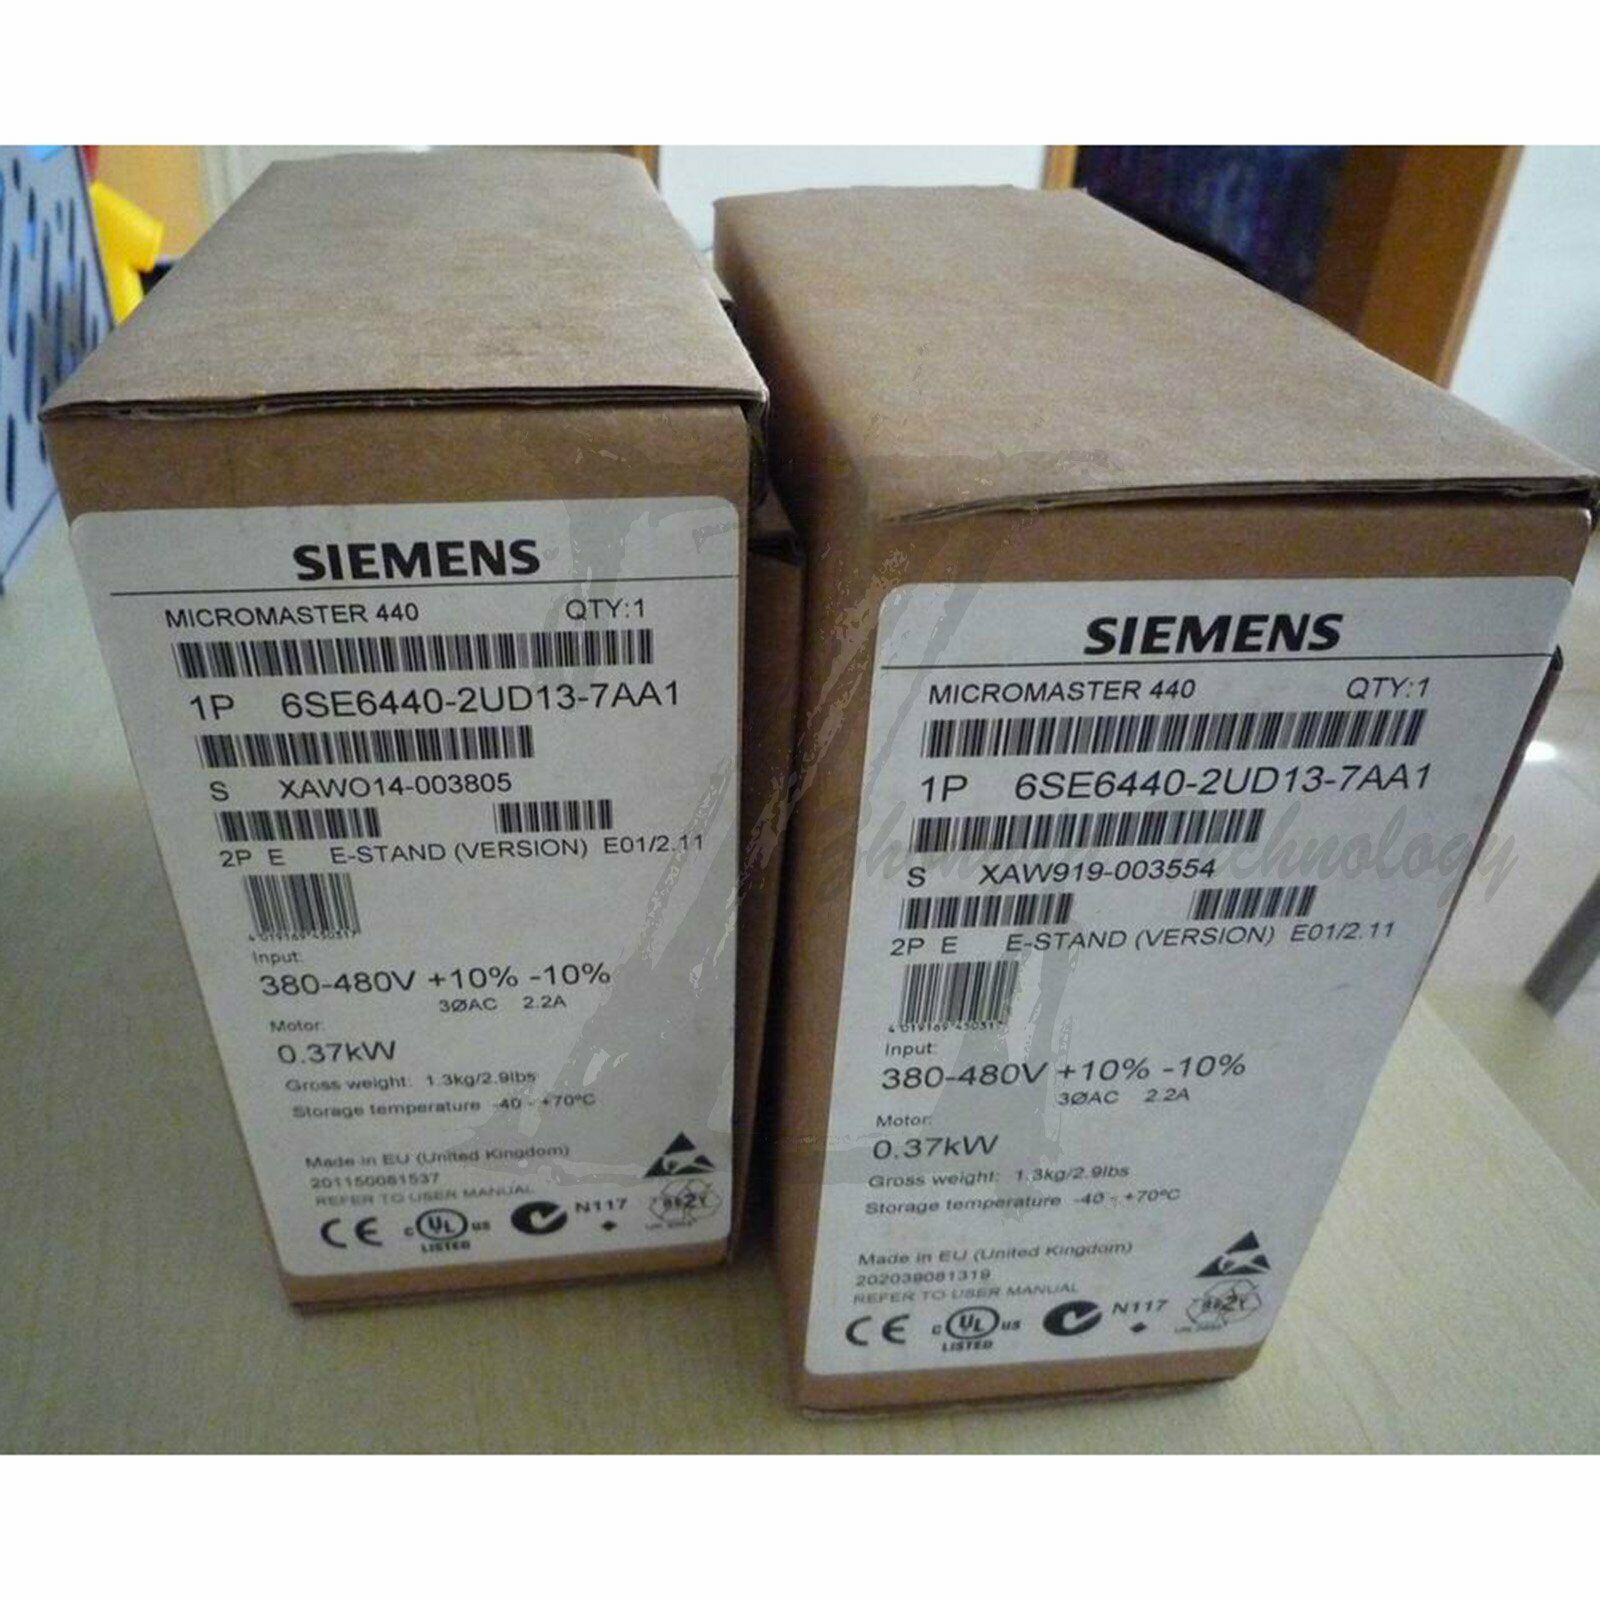 New Siemens MICROMASTER 440 6SE6440-2UD13-7AA1 INVERTER